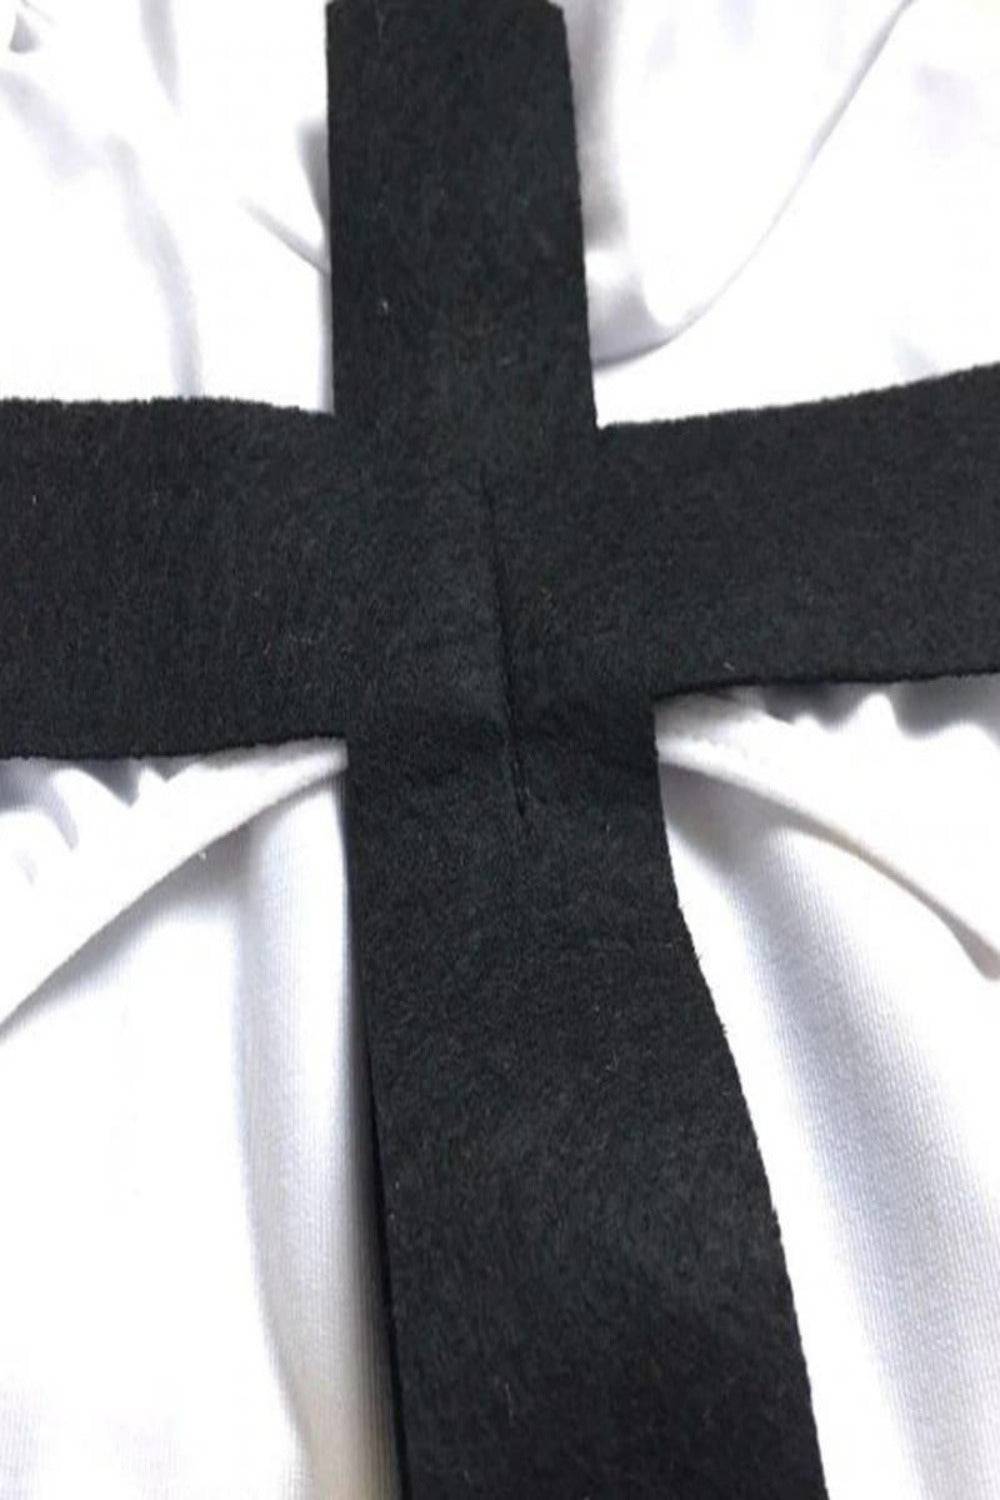 Make Him Confess Sexy Nun Cosplay Costume Dress - Black, S - 3XL - TGC Boutique - Nun Costume